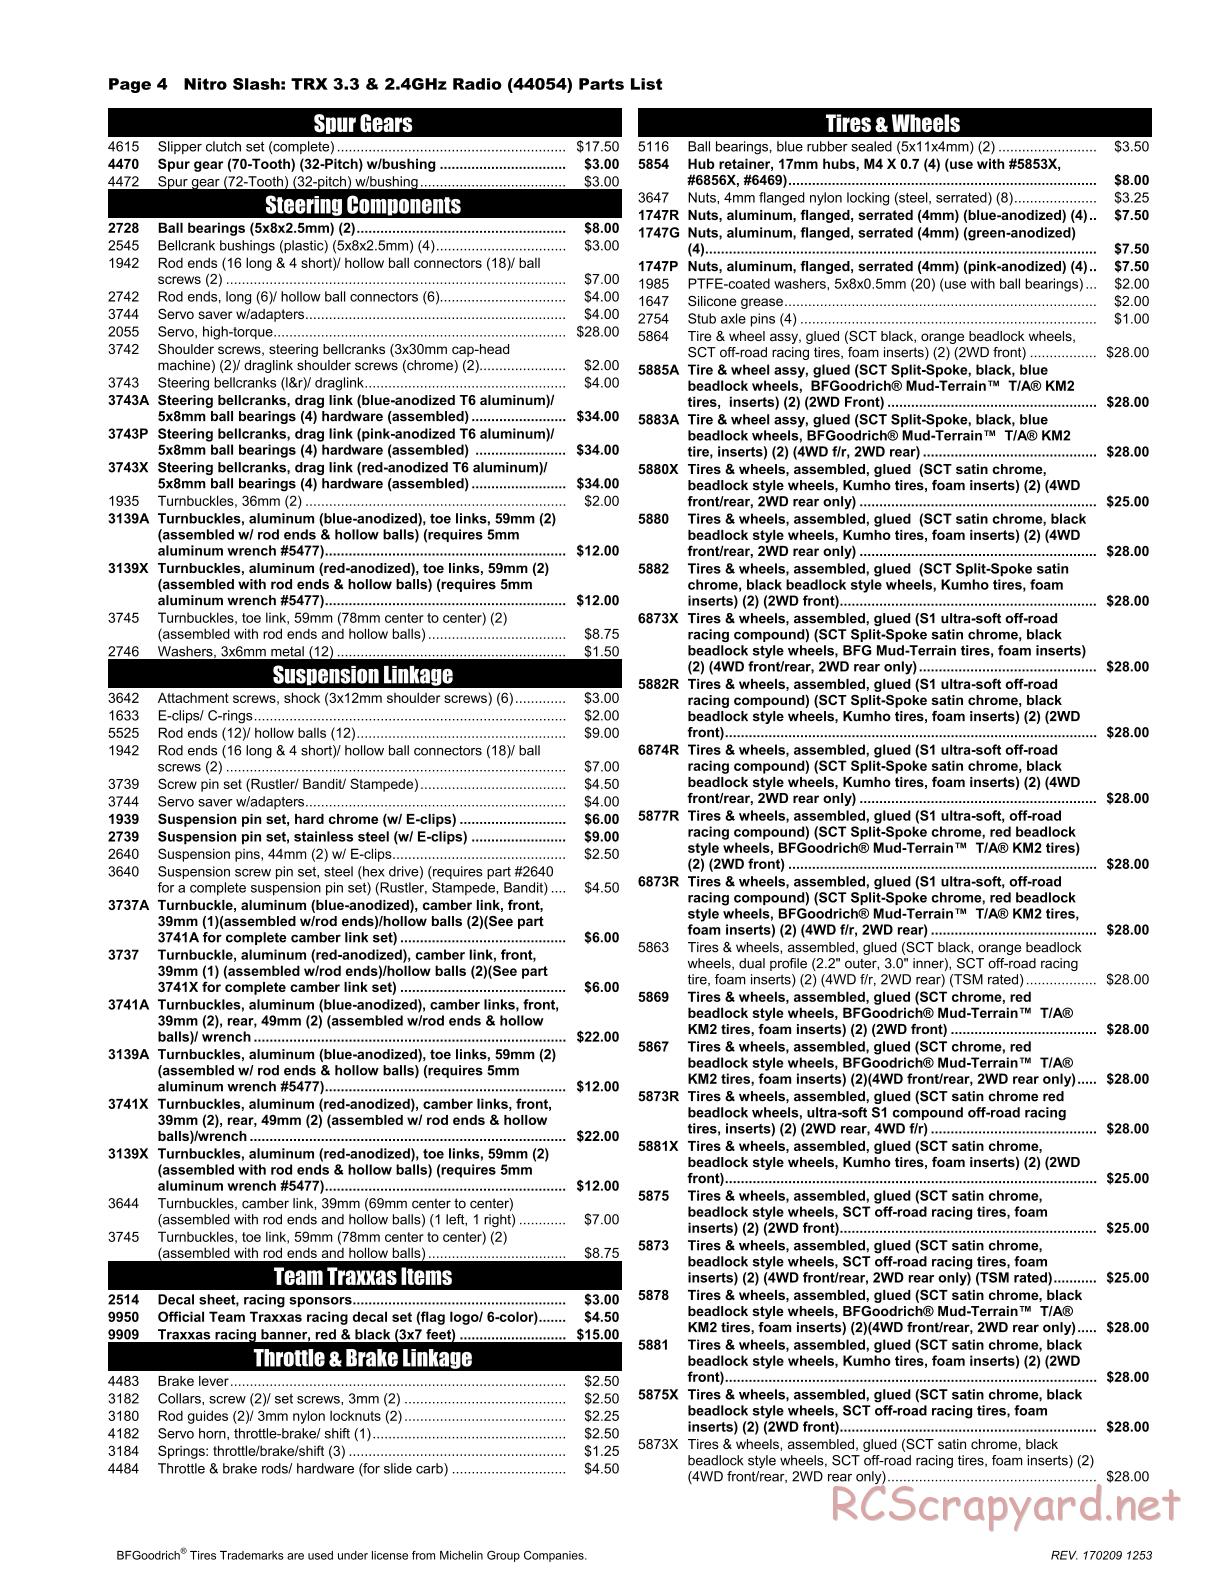 Traxxas - Nitro Slash (2012) - Parts List - Page 4